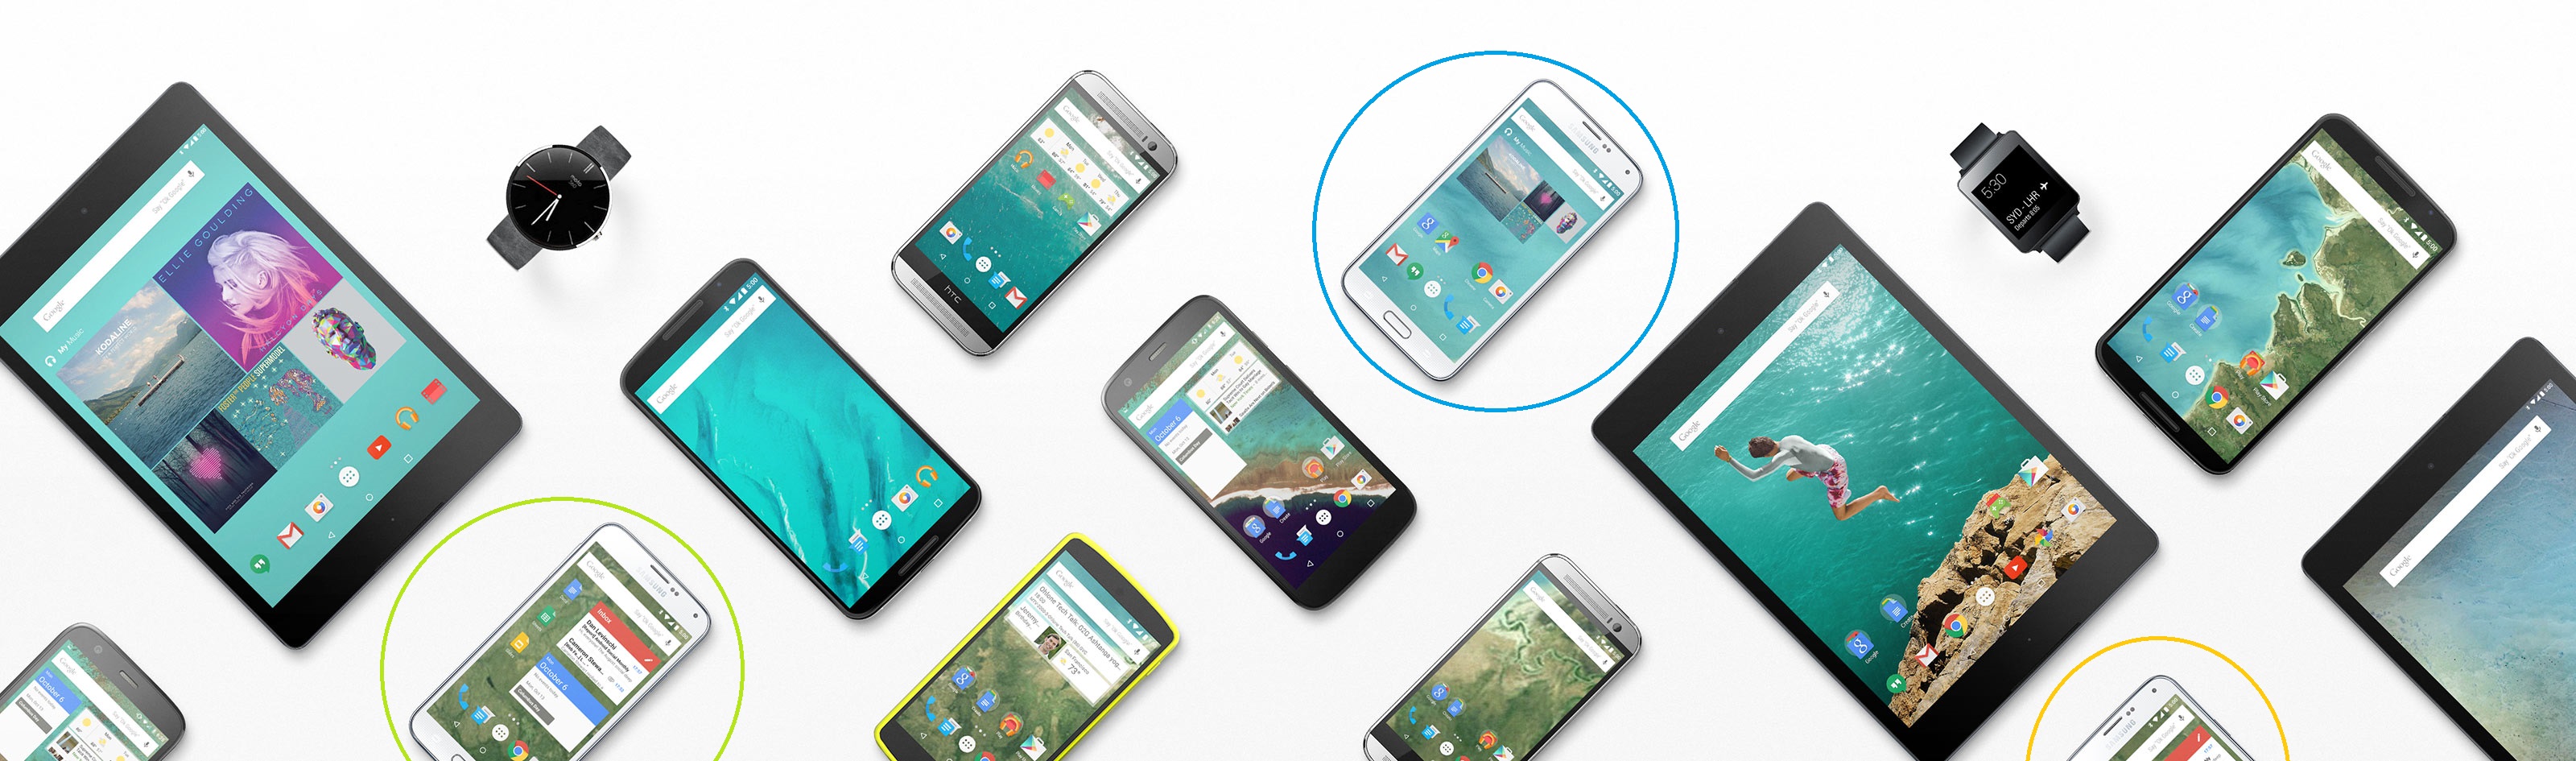 Google deutet auf Galaxy S5 Google Play Edition hin - All ...